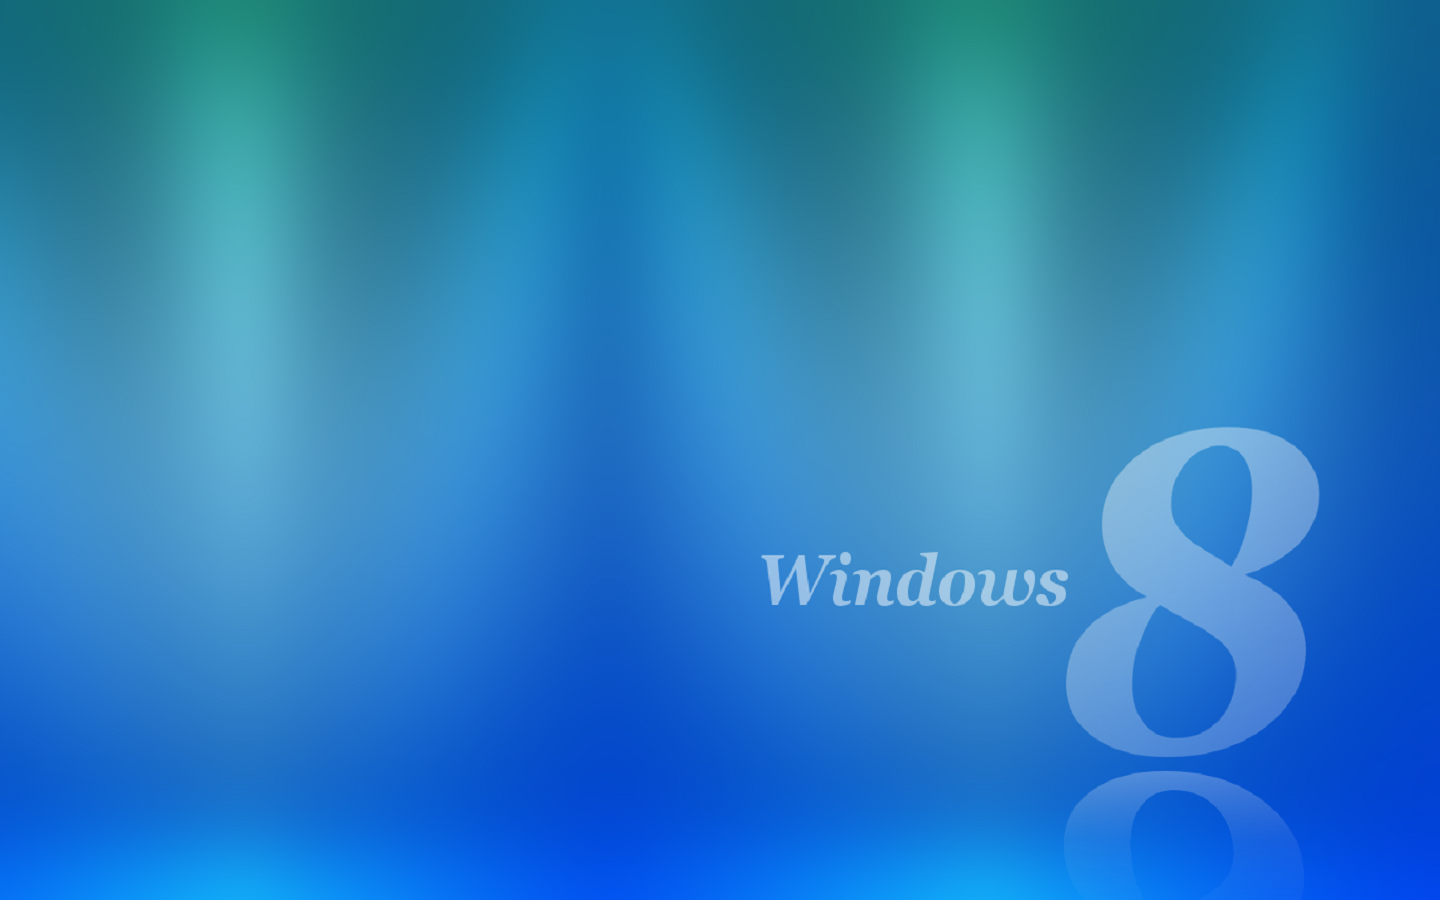 Windows WallpaperWindows 8 Wallpapers 1440x900